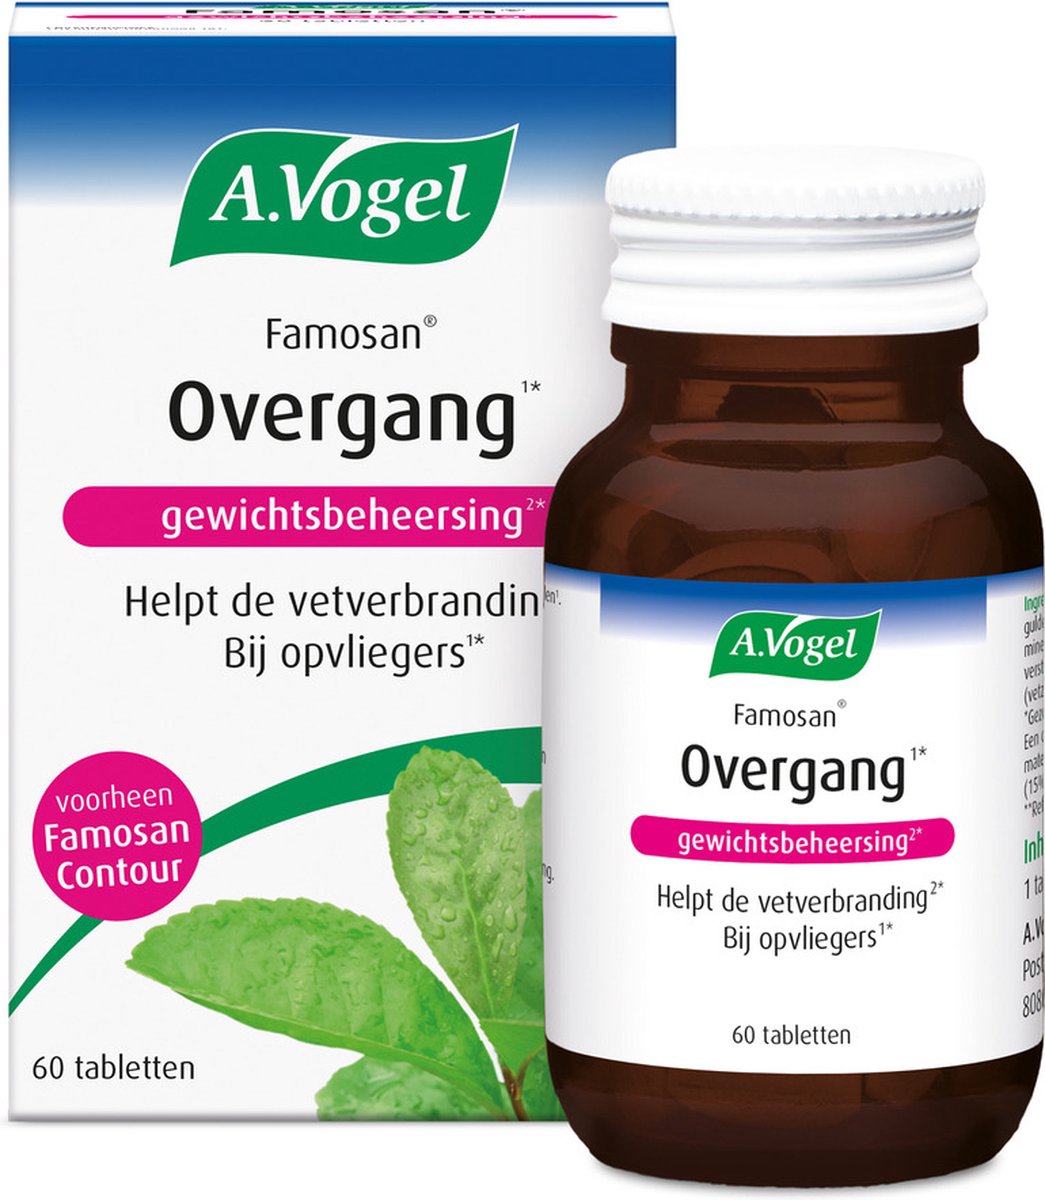 A.Vogel Famosan Overgang gewichtsbeheersing tabletten - Yerba mate helpt de vetverbranding en helpt om op gewicht te blijven.* - 60 st - A.Vogel